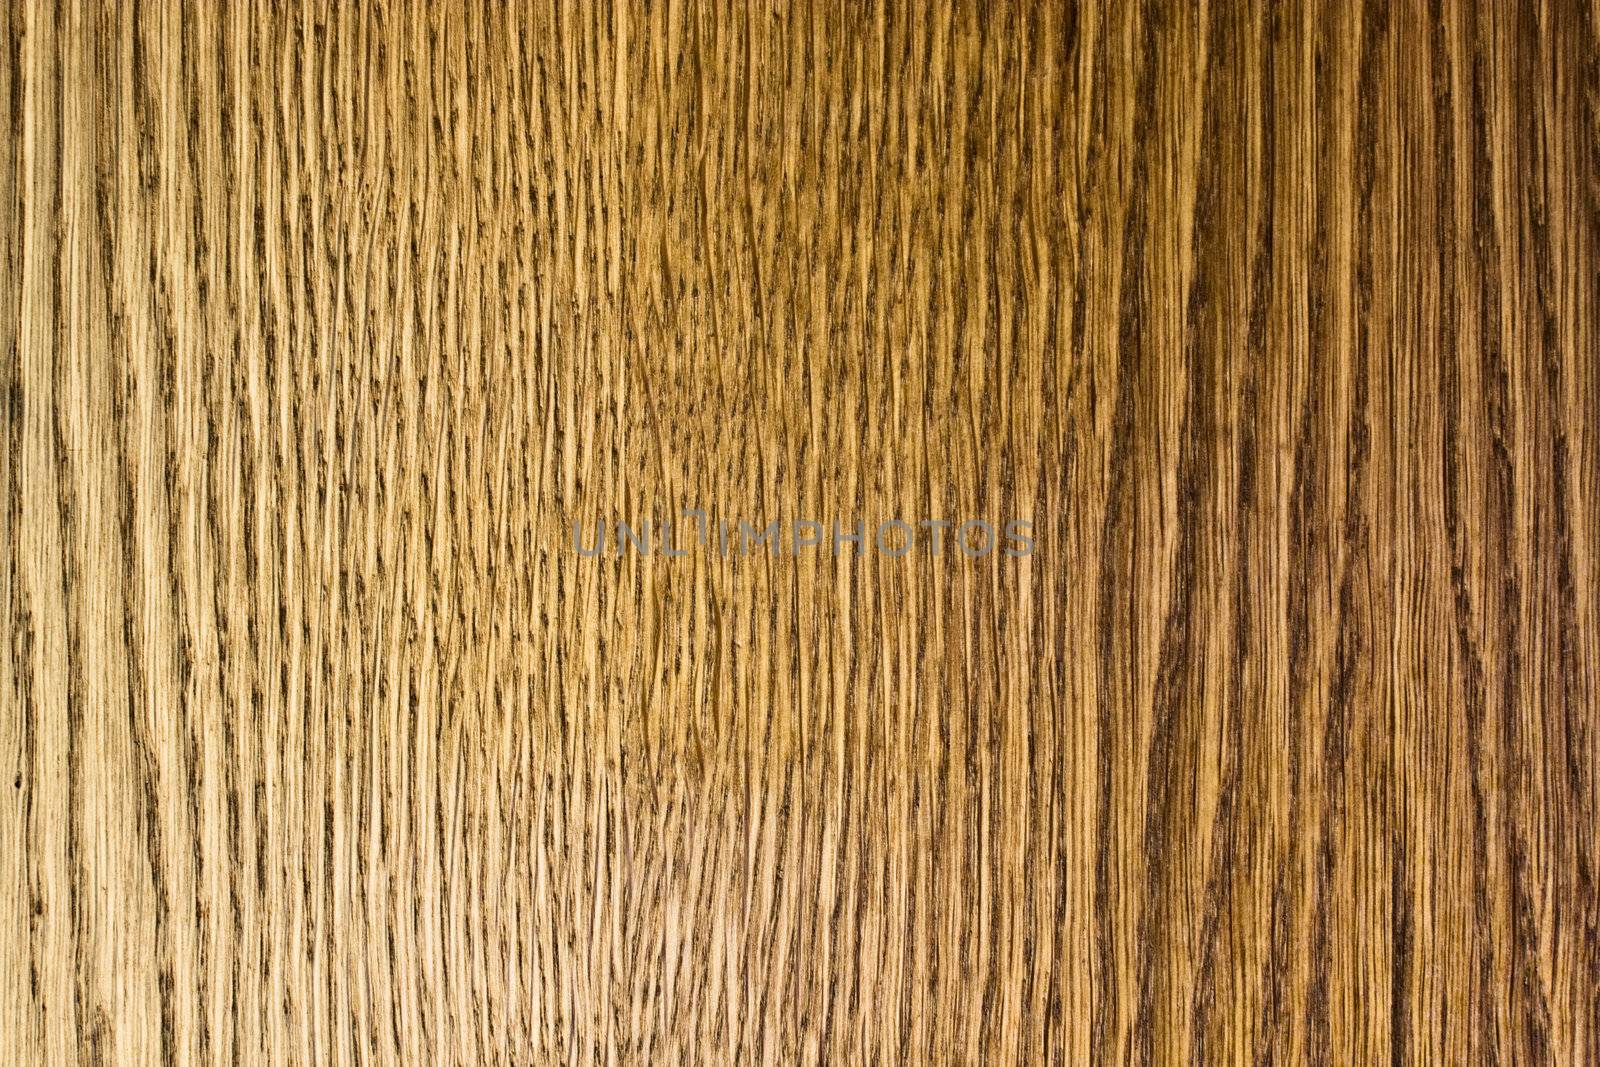 Wood texture background by rozhenyuk